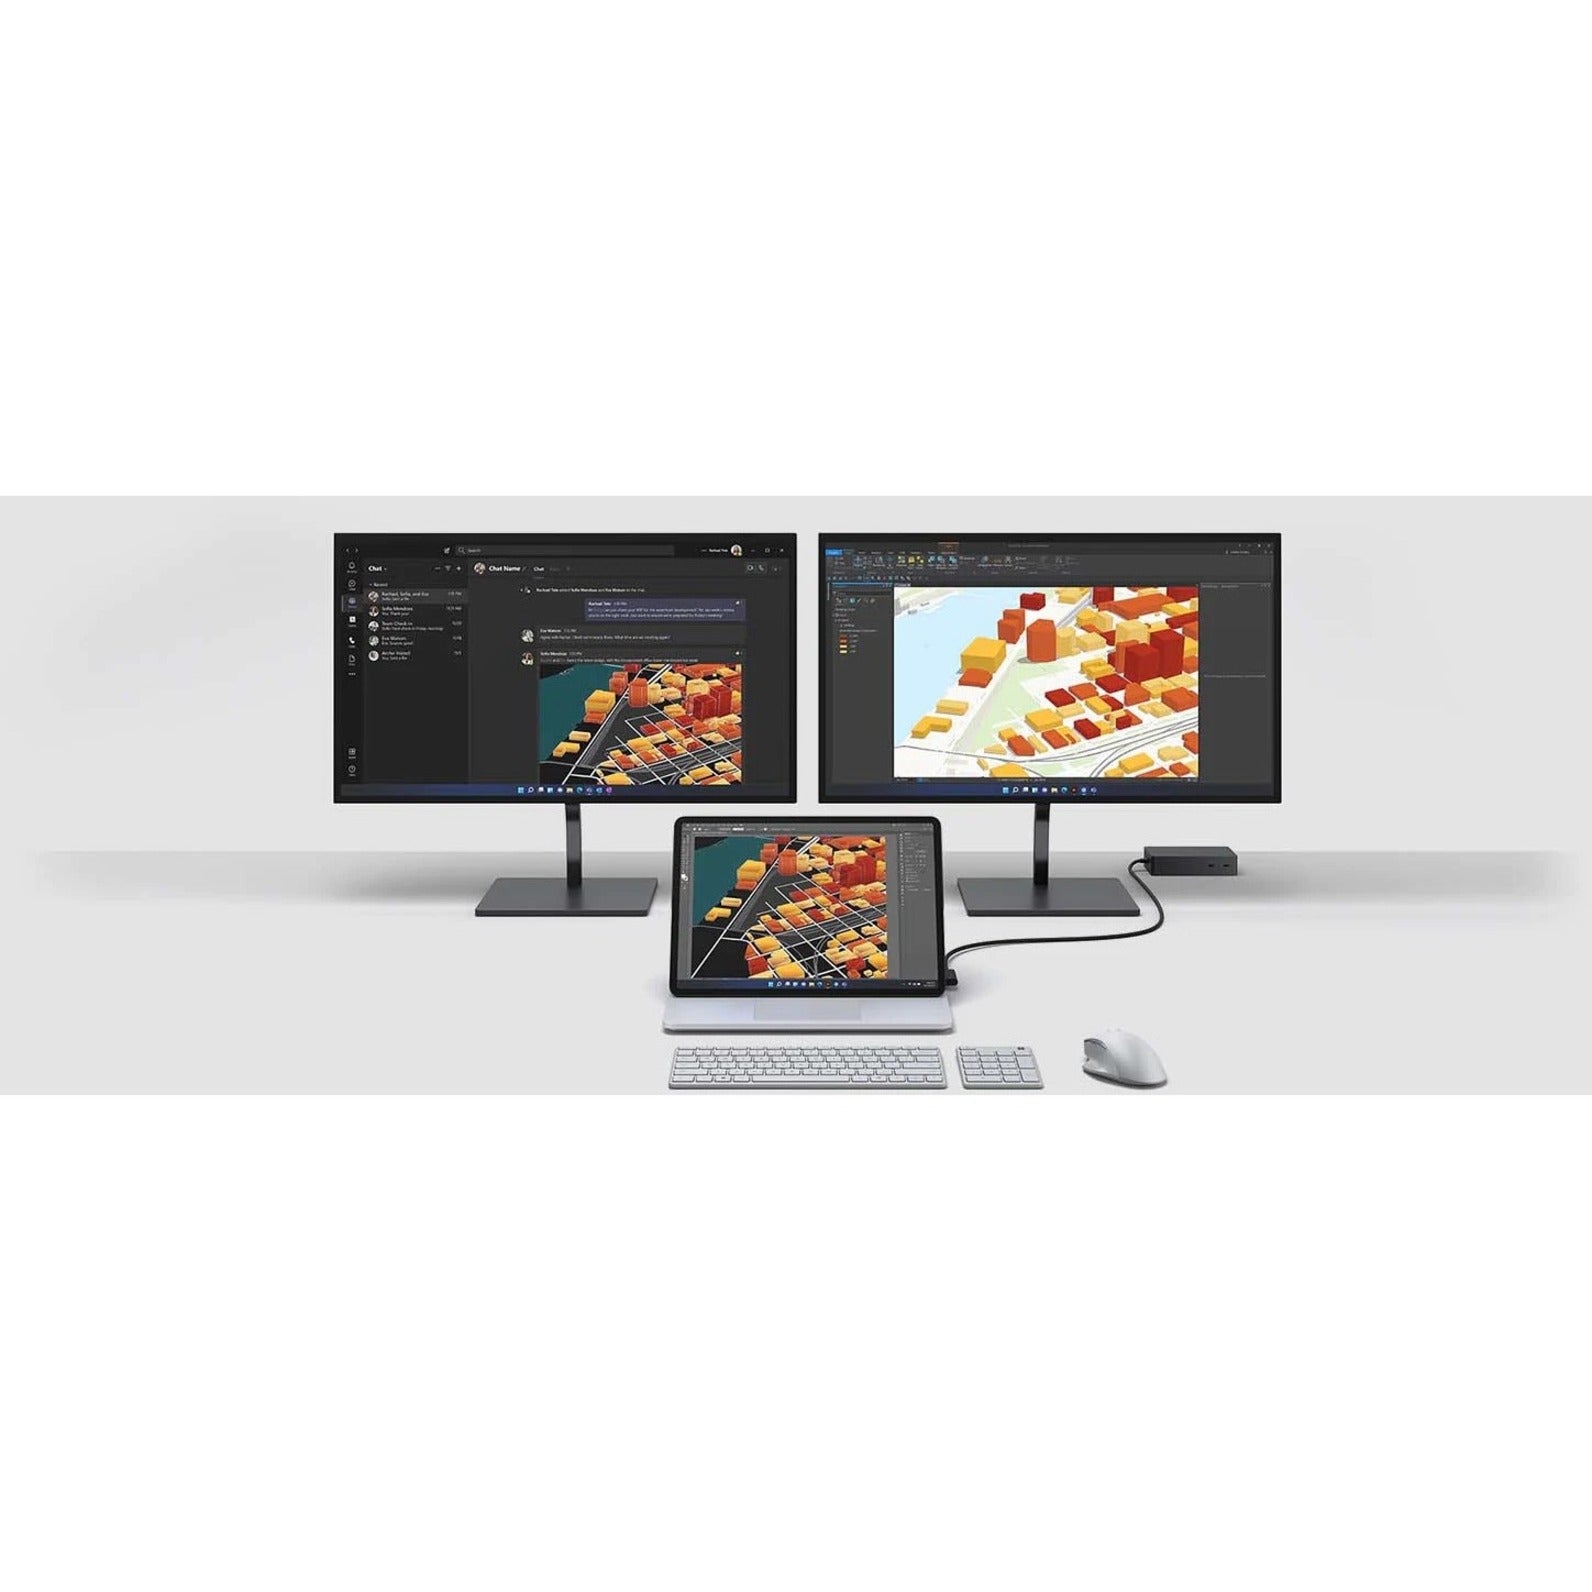 Microsoft ABR-00026 Surface Laptop Studio 2 in 1 Notebook, 14.4", Core i7, 16GB RAM, 512GB SSD, Windows 10 Pro